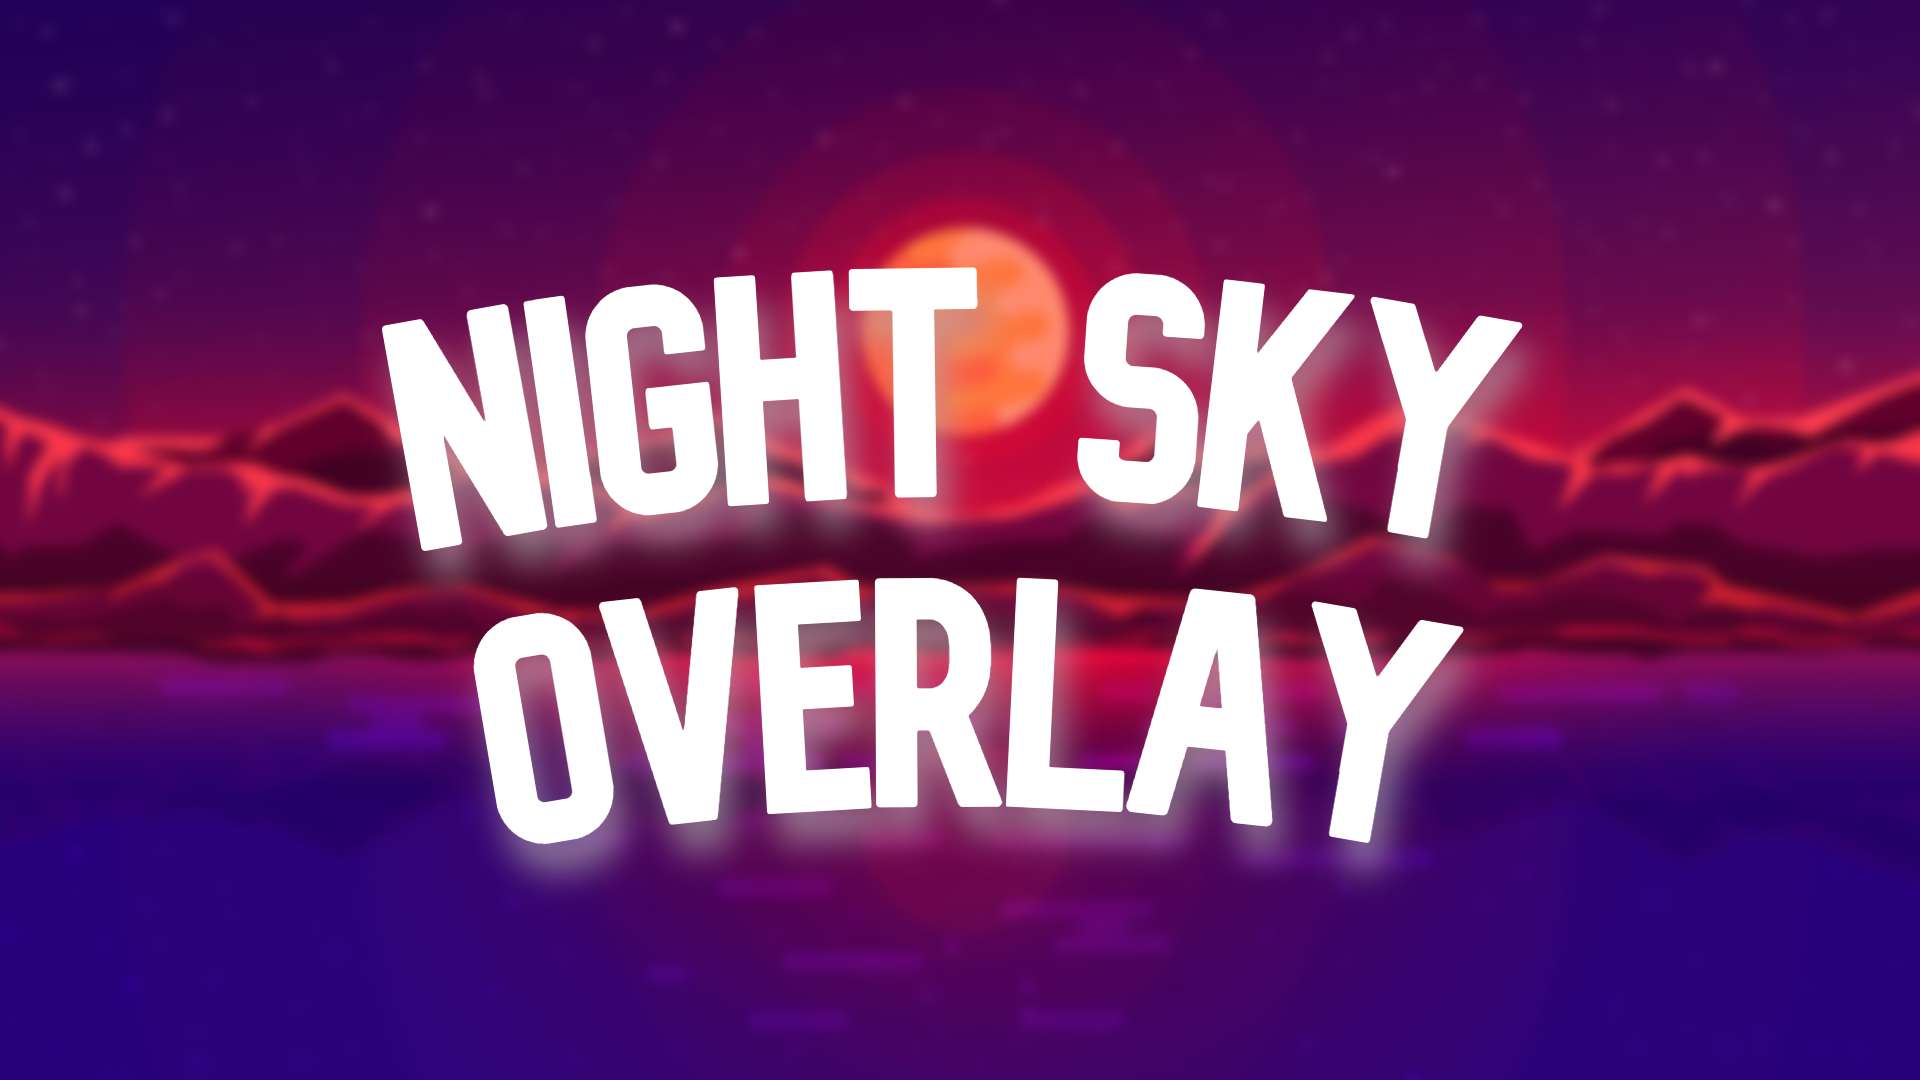 Night Sky Overlay #6 16x by rh56 on PvPRP